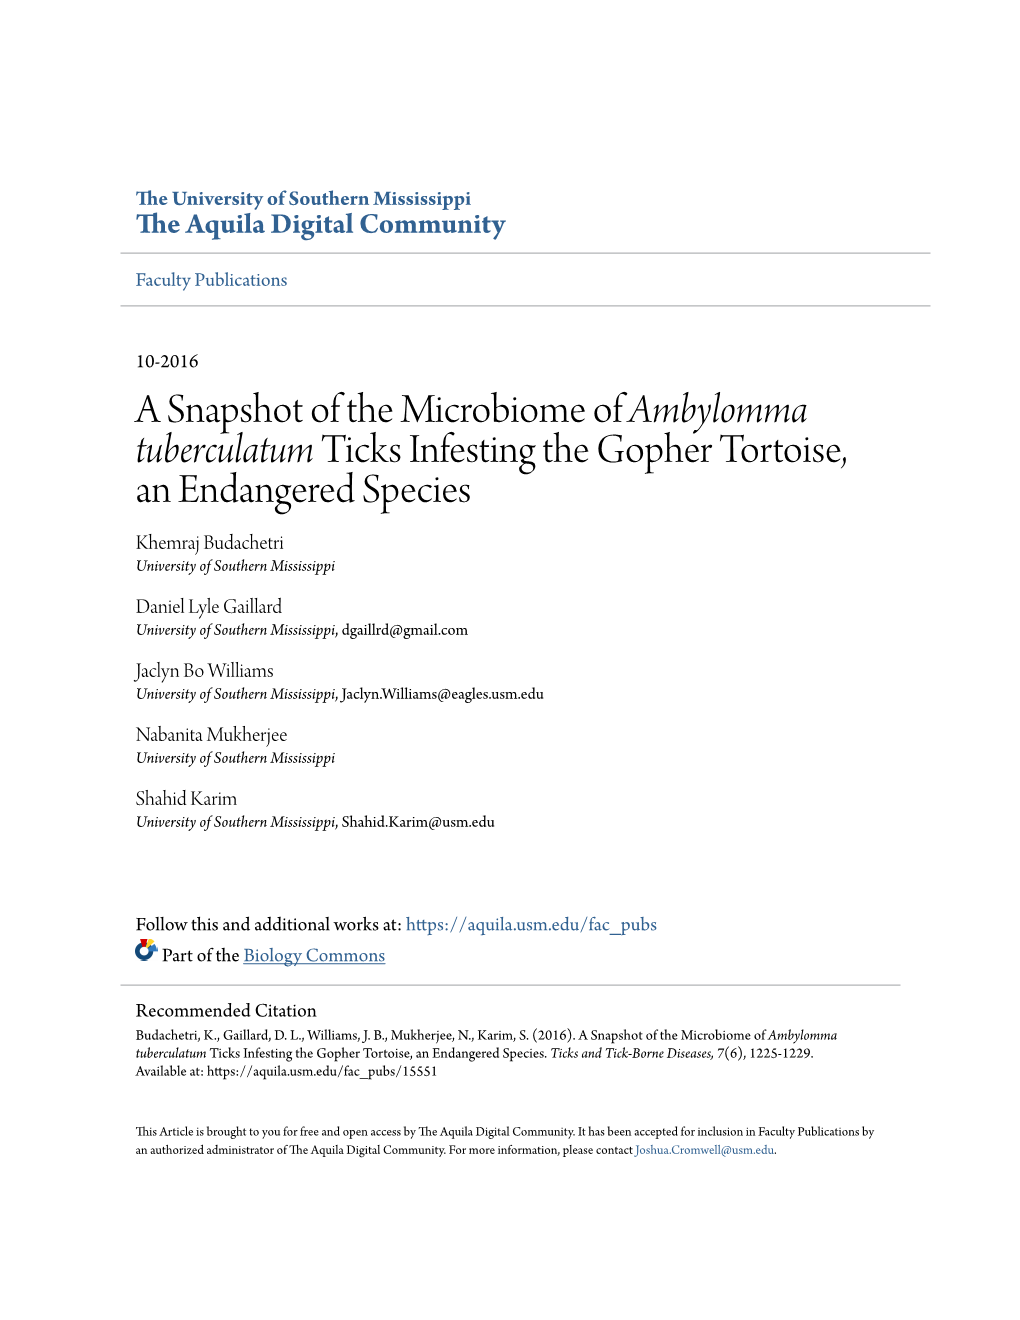 A Snapshot of the Microbiome of Ambylomma Tuberculatum Ticks